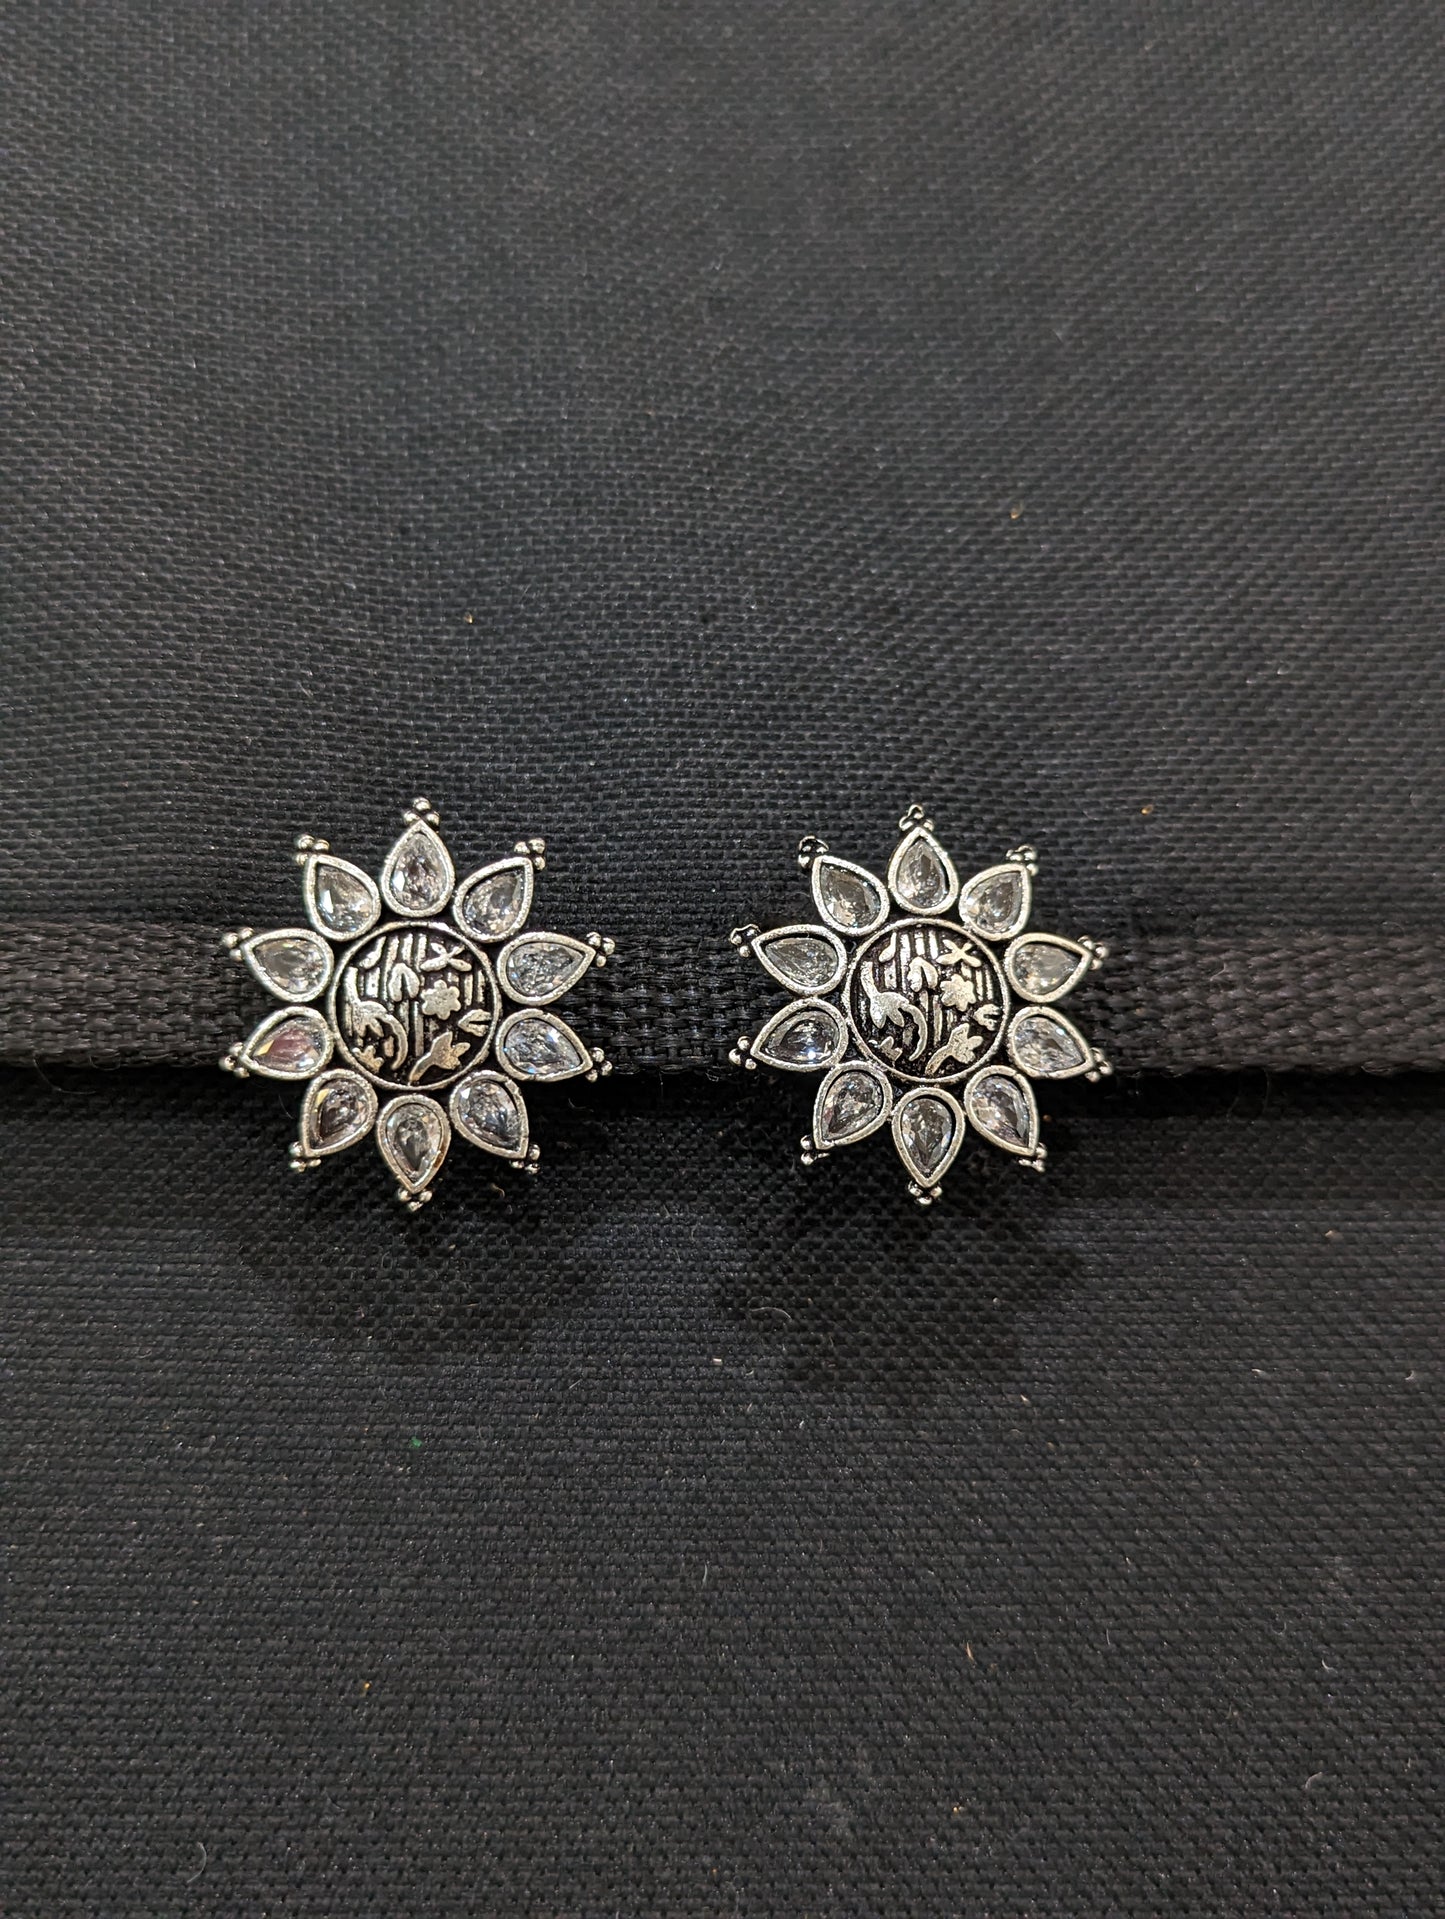 SALE - Oxidized Silver Polki / CZ stone Stud Earrings